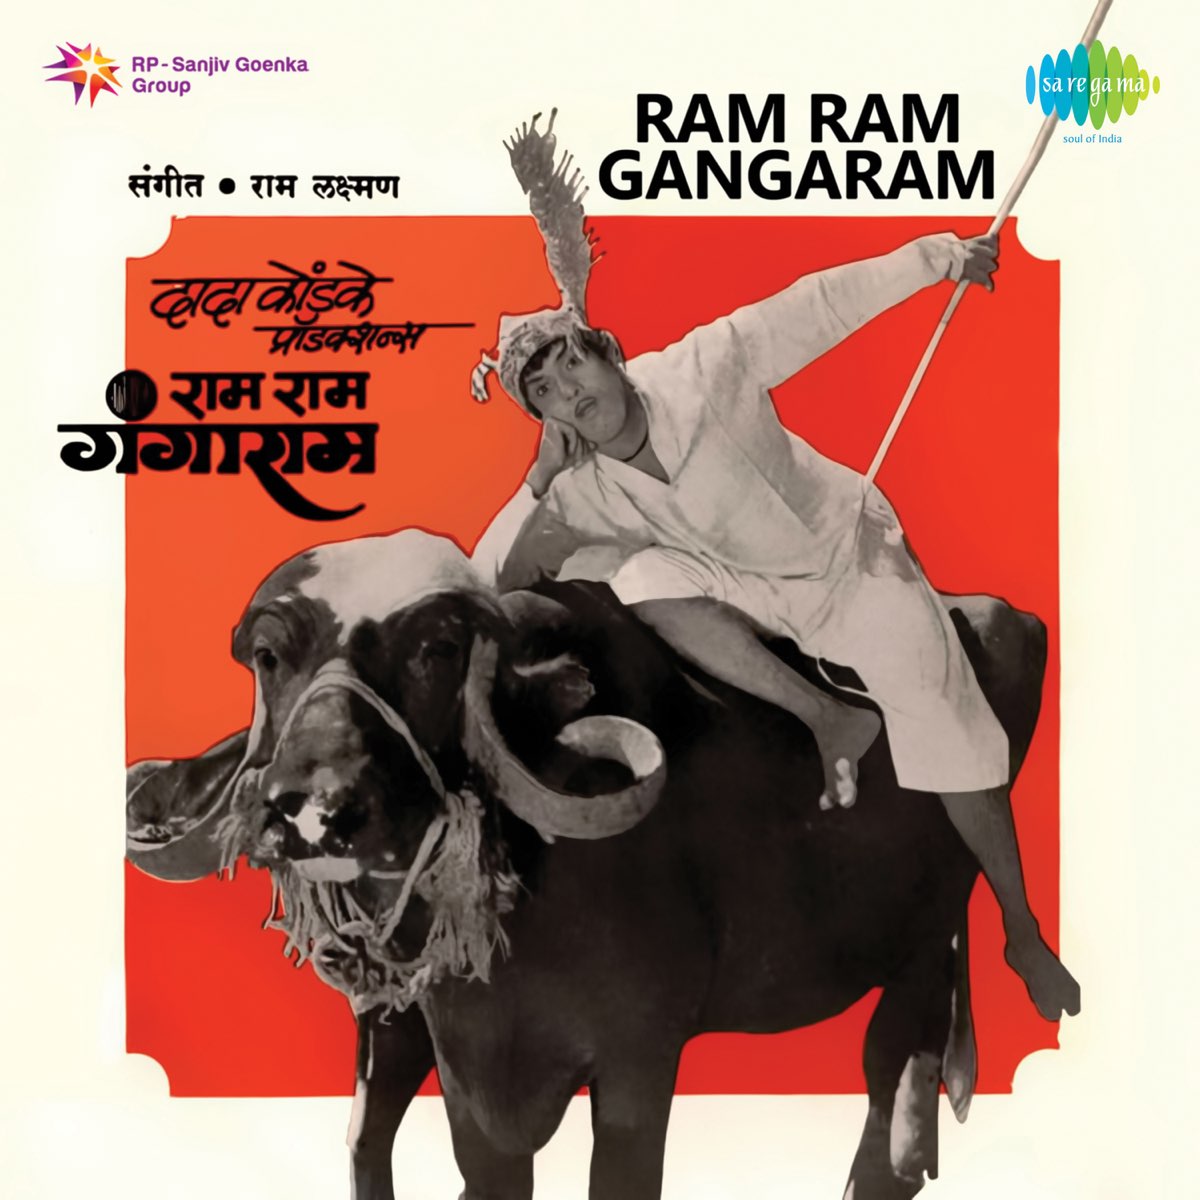 Ram Ram Gangaram (Original Motion Picture - EP by Raamlaxman on Apple Music